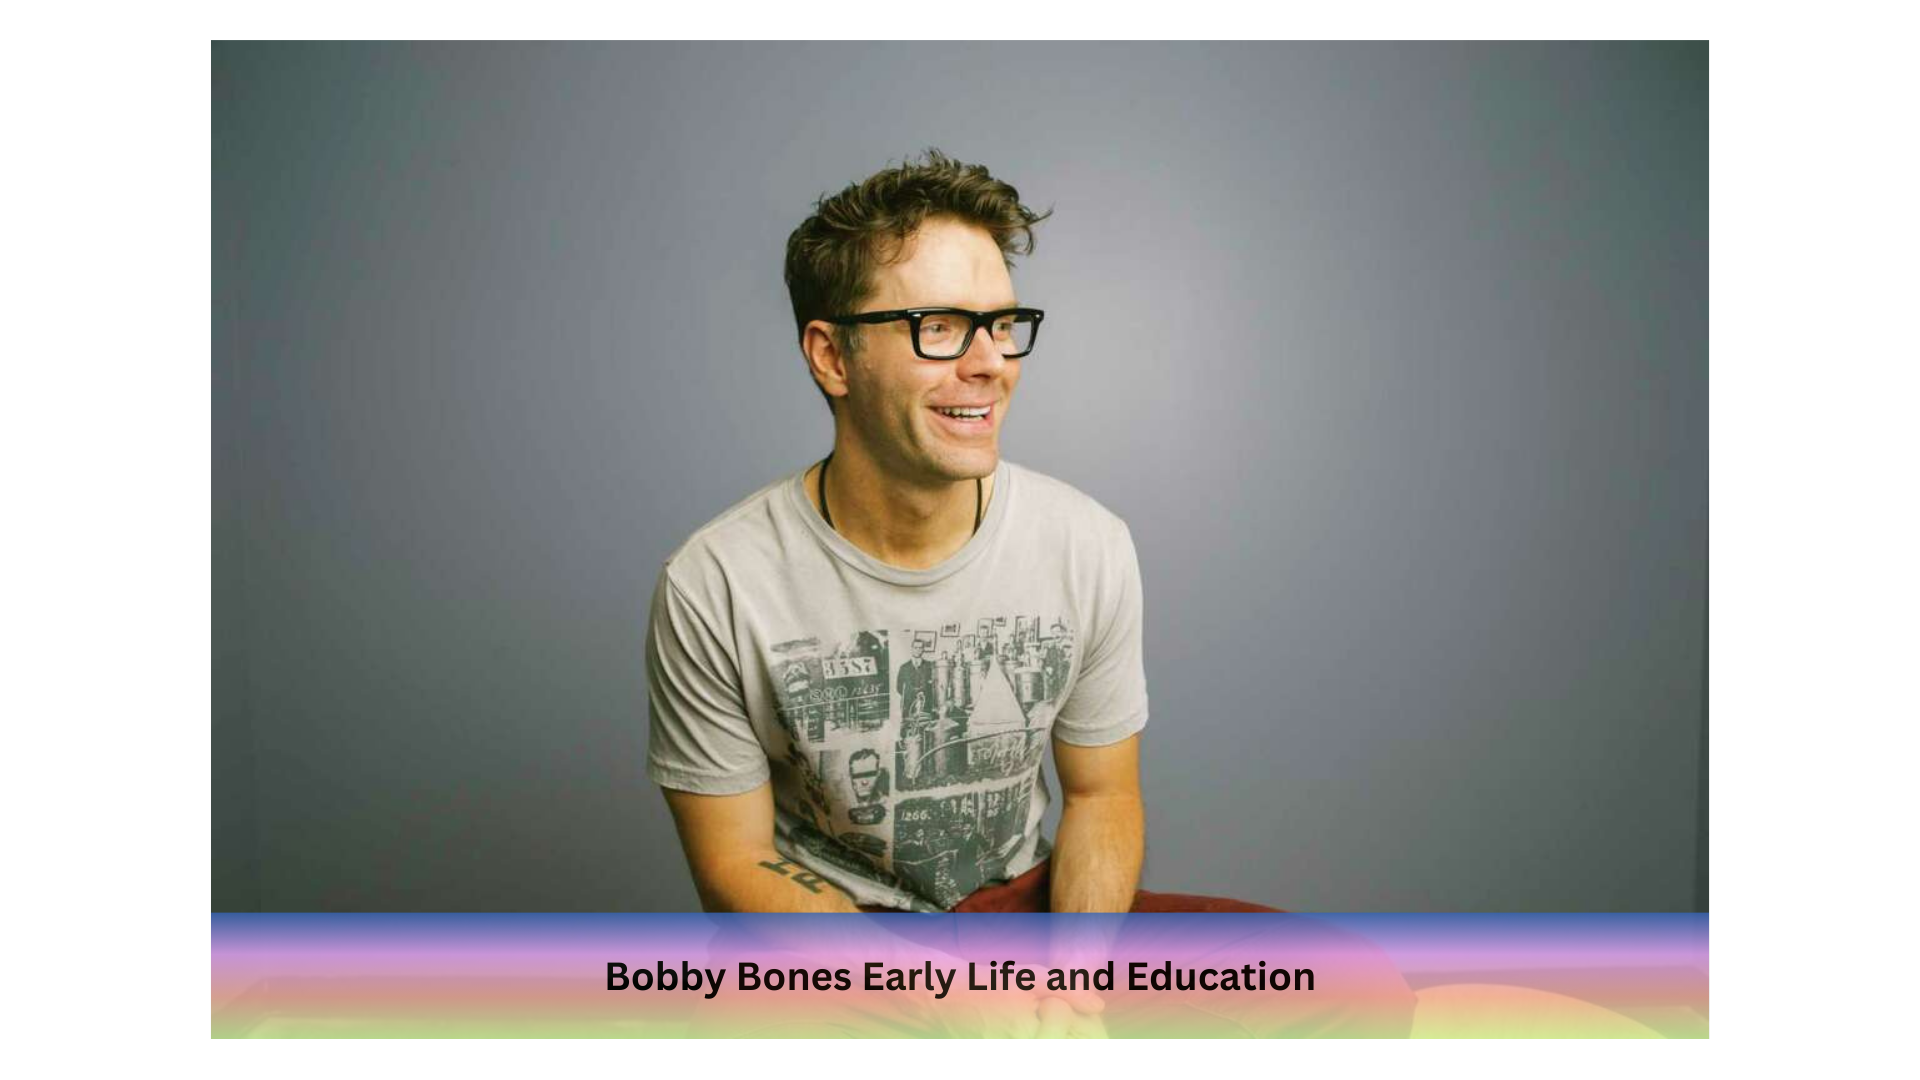 Bobby Bones Early Life and Education